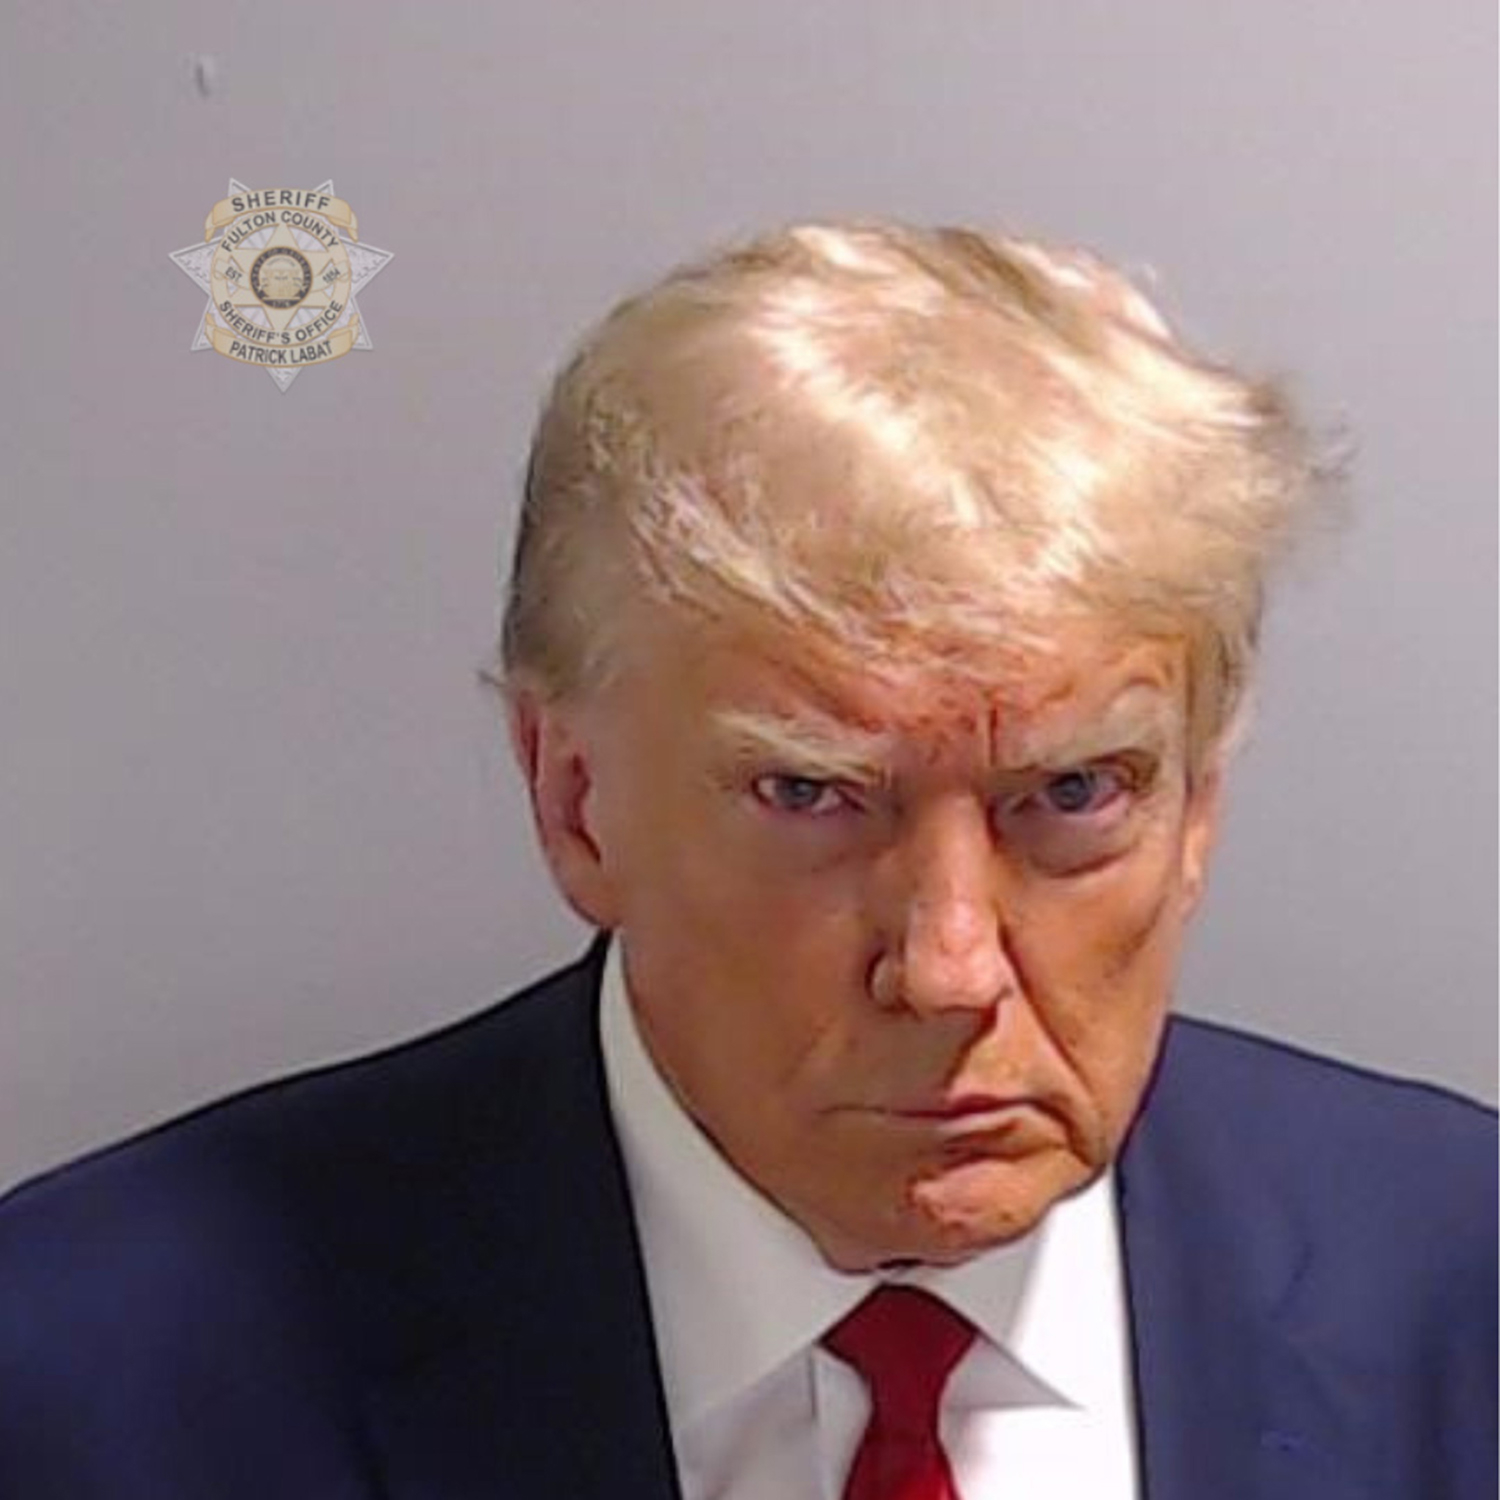 Trump&#x27;s mug shot